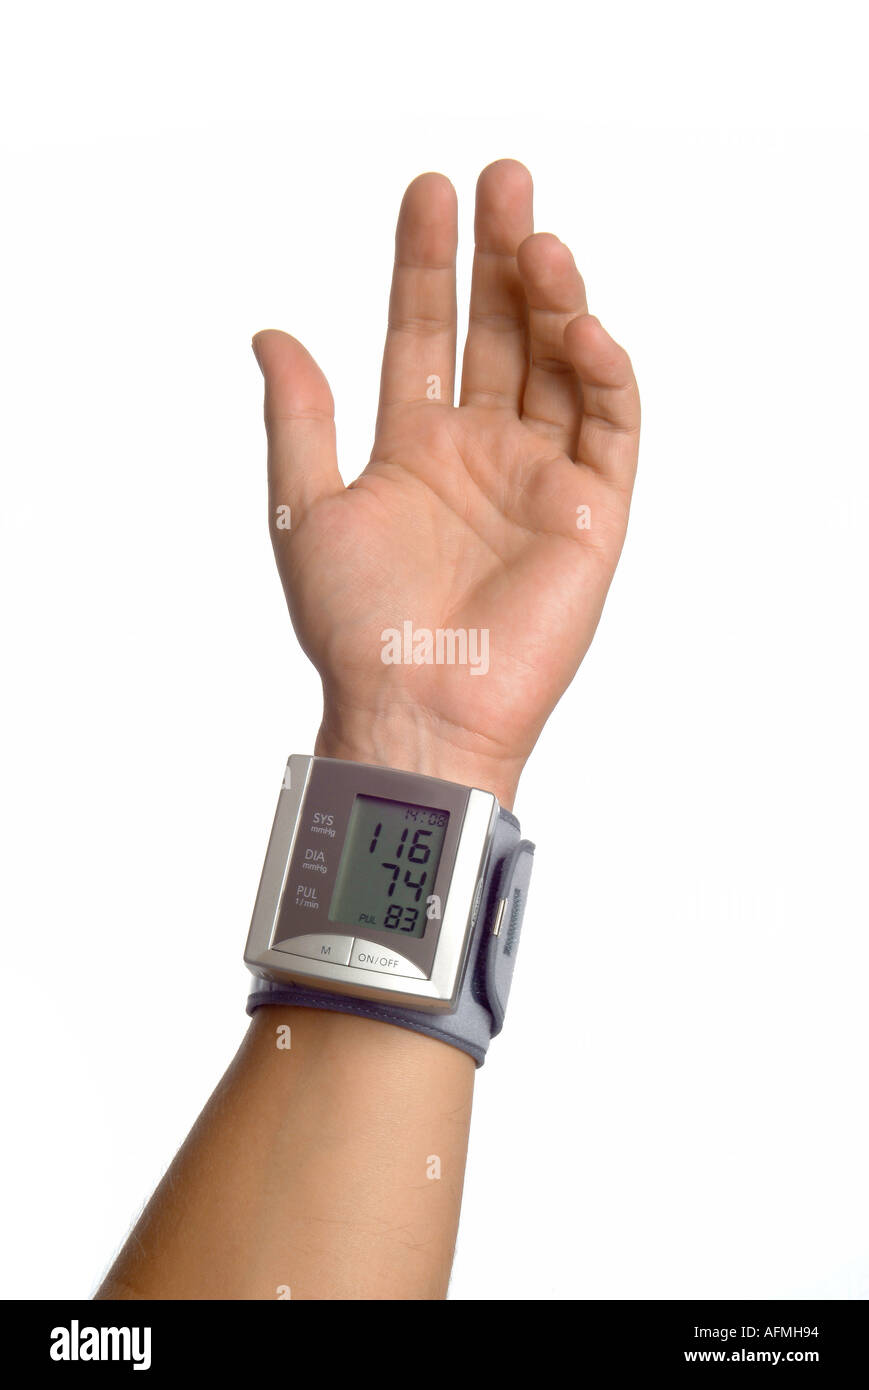 blood pressure measurement Blutdruckmessgerät Stock Photo